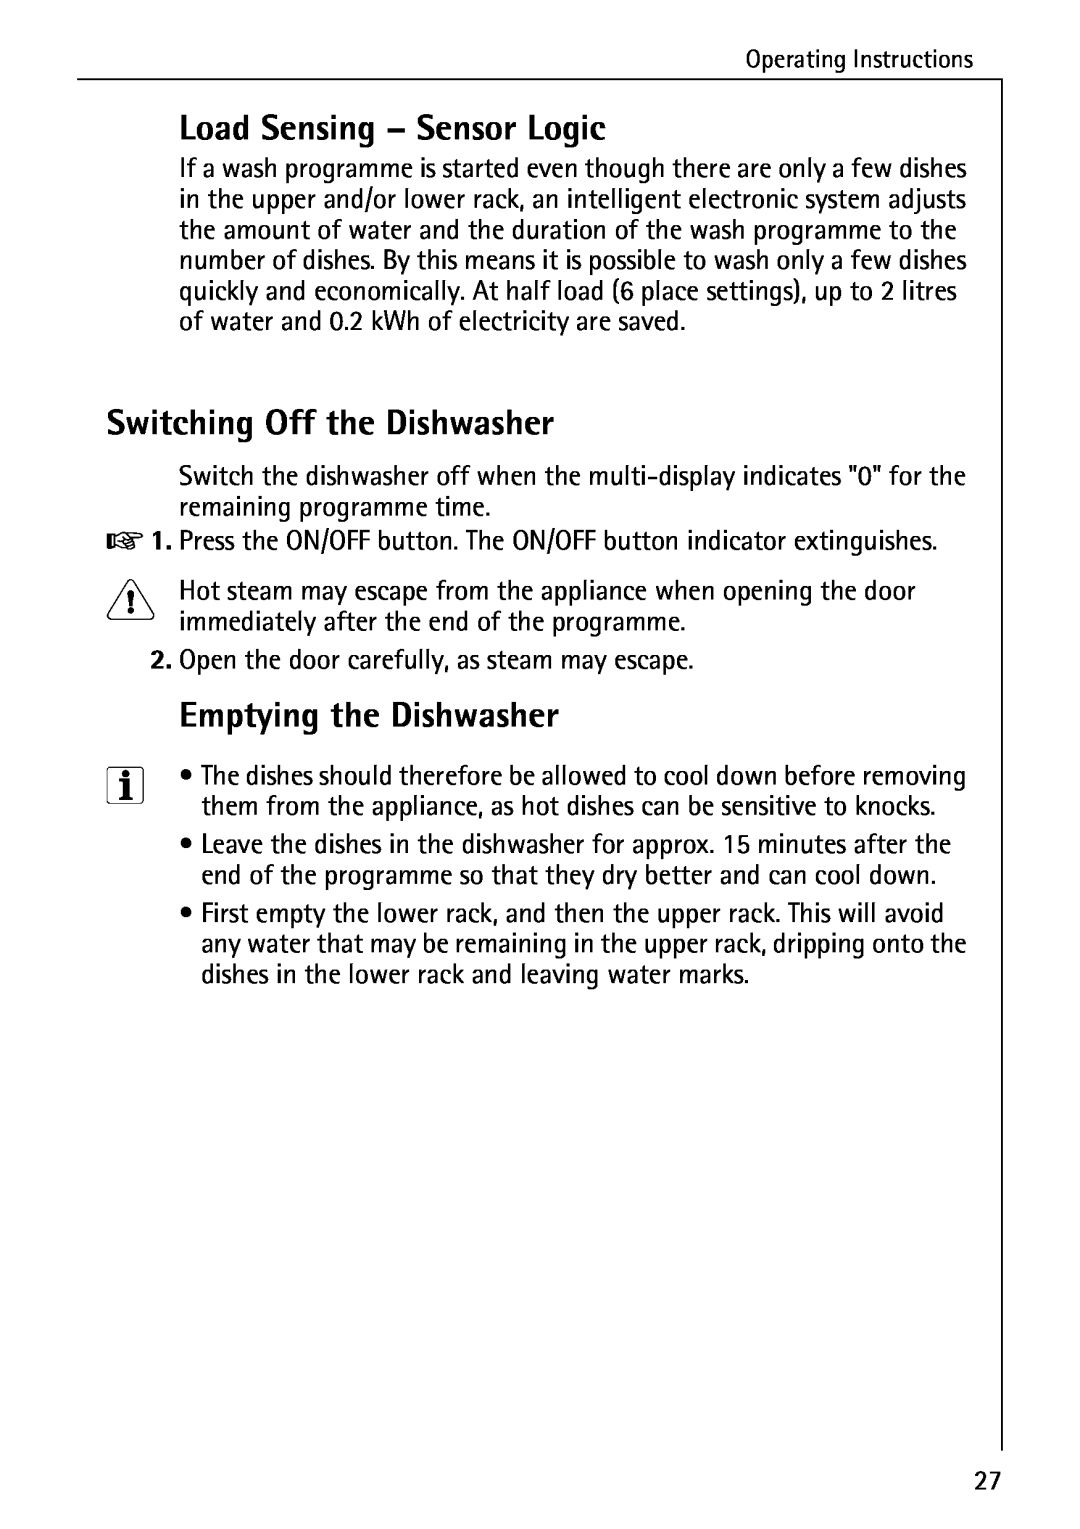 Electrolux 60820 manual Load Sensing - Sensor Logic, Switching Off the Dishwasher, Emptying the Dishwasher 